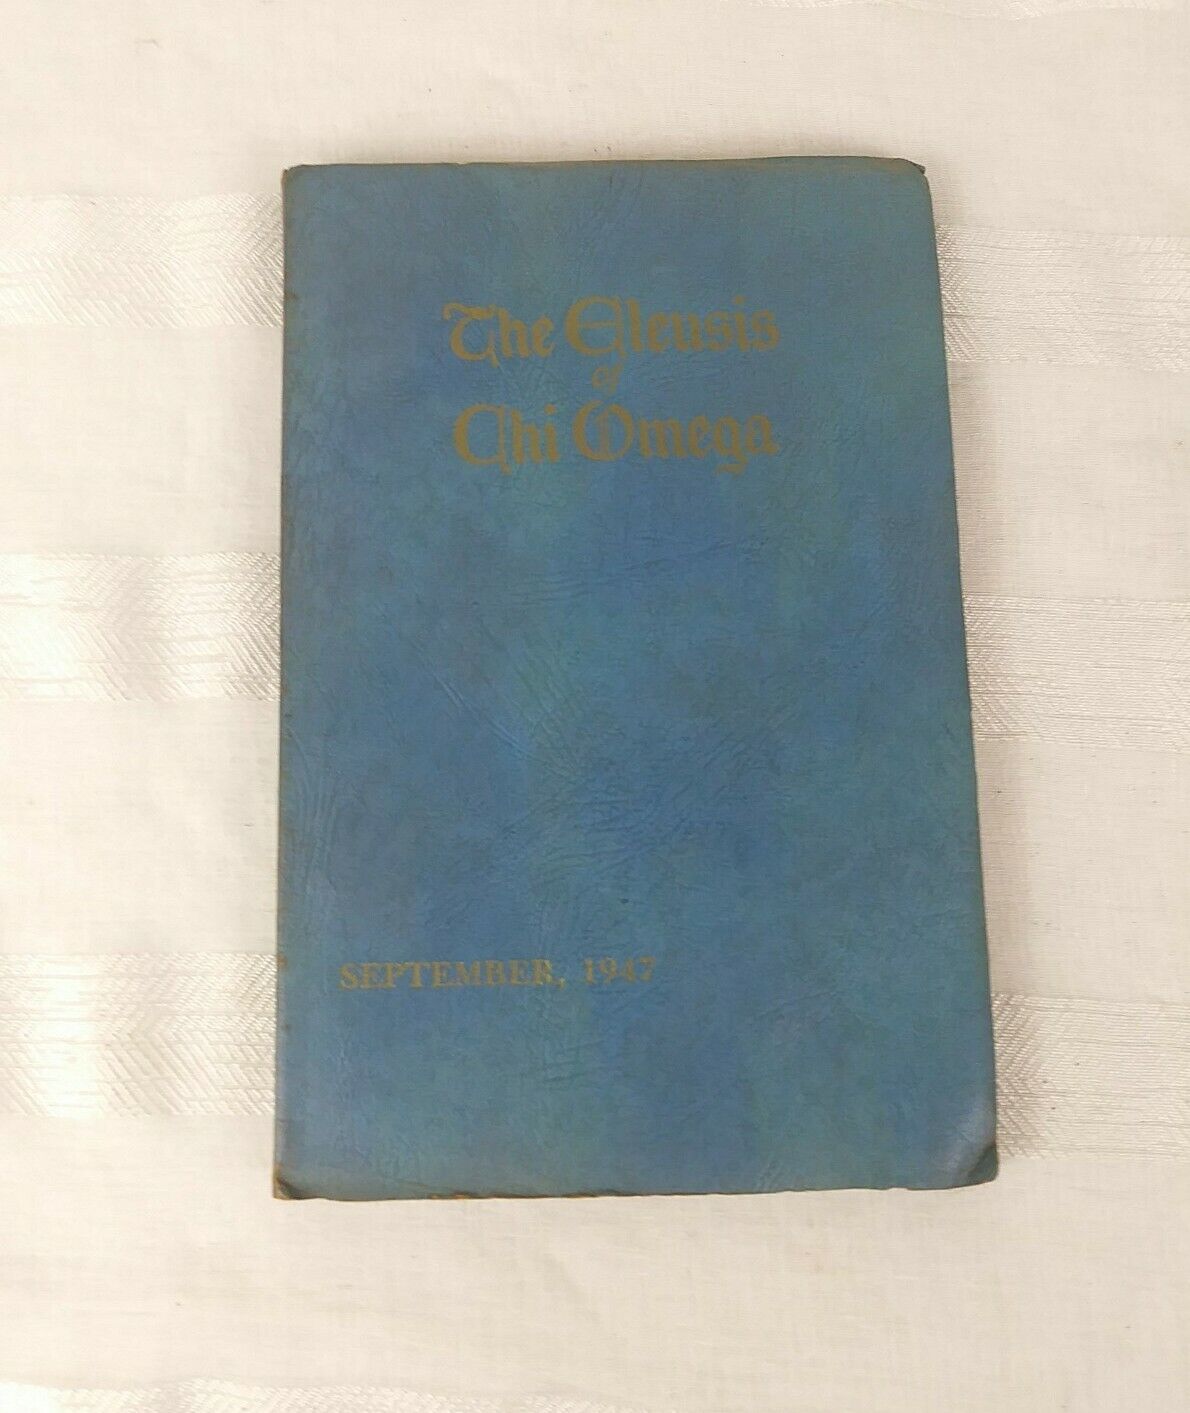 The Eleusis of Chi Omega Book September 1947 Chi Omega Book 1947 